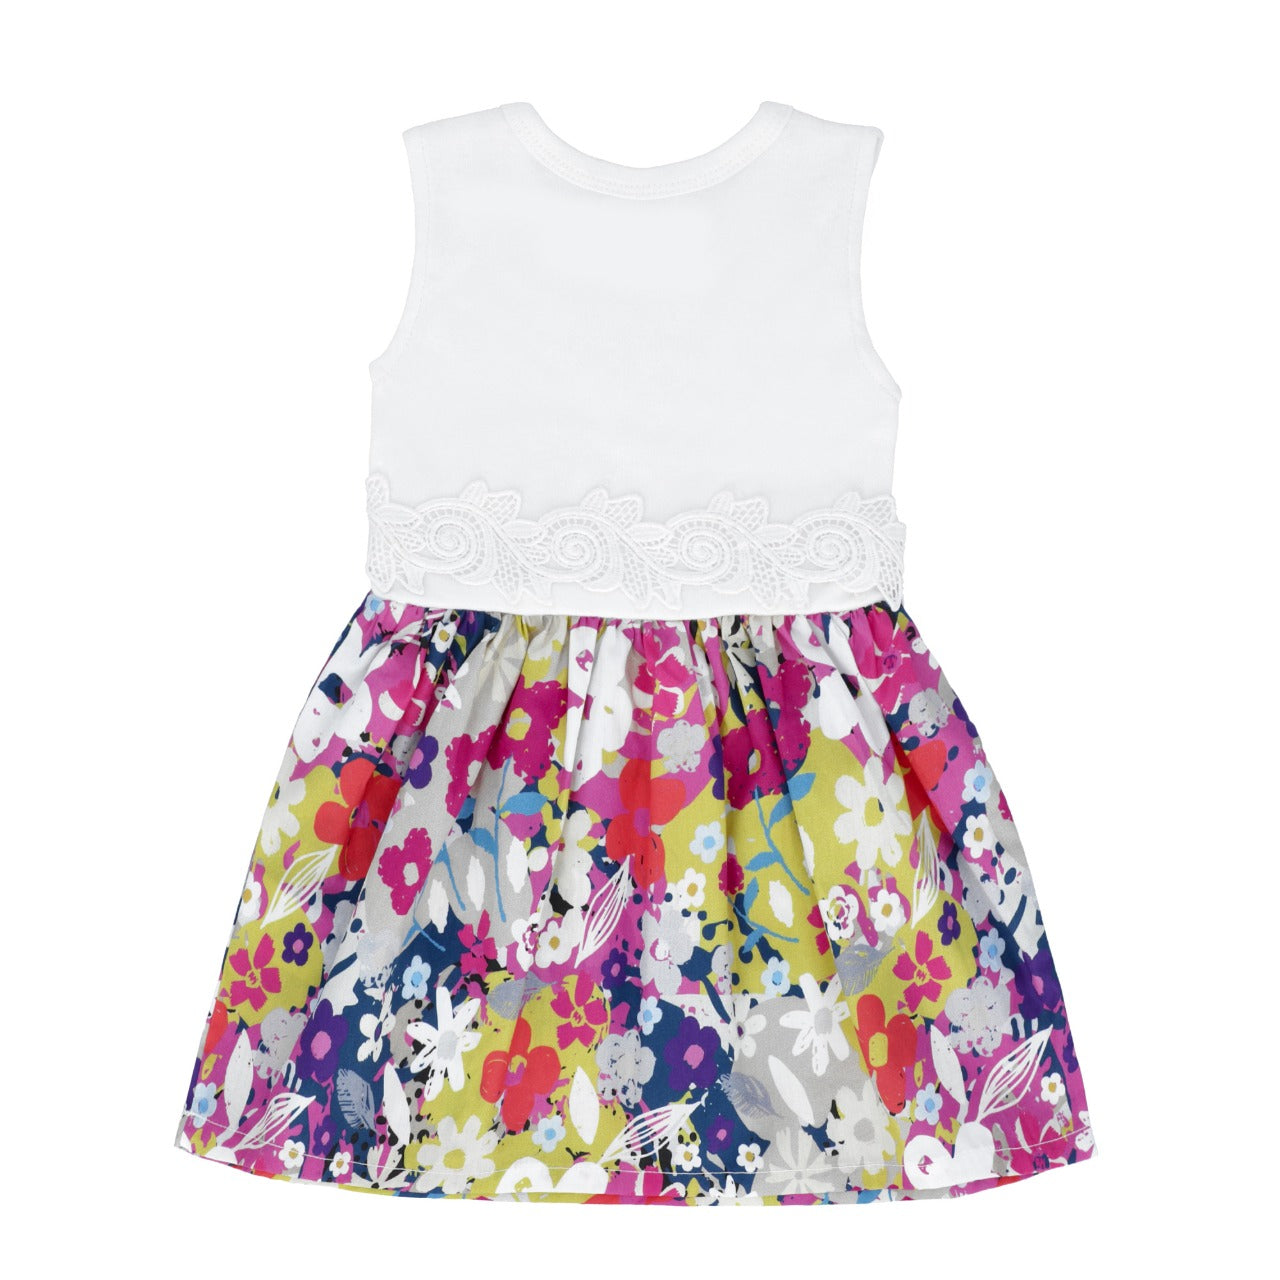 FG-5512 Multicolor Floral with White Lace Cotton Dress